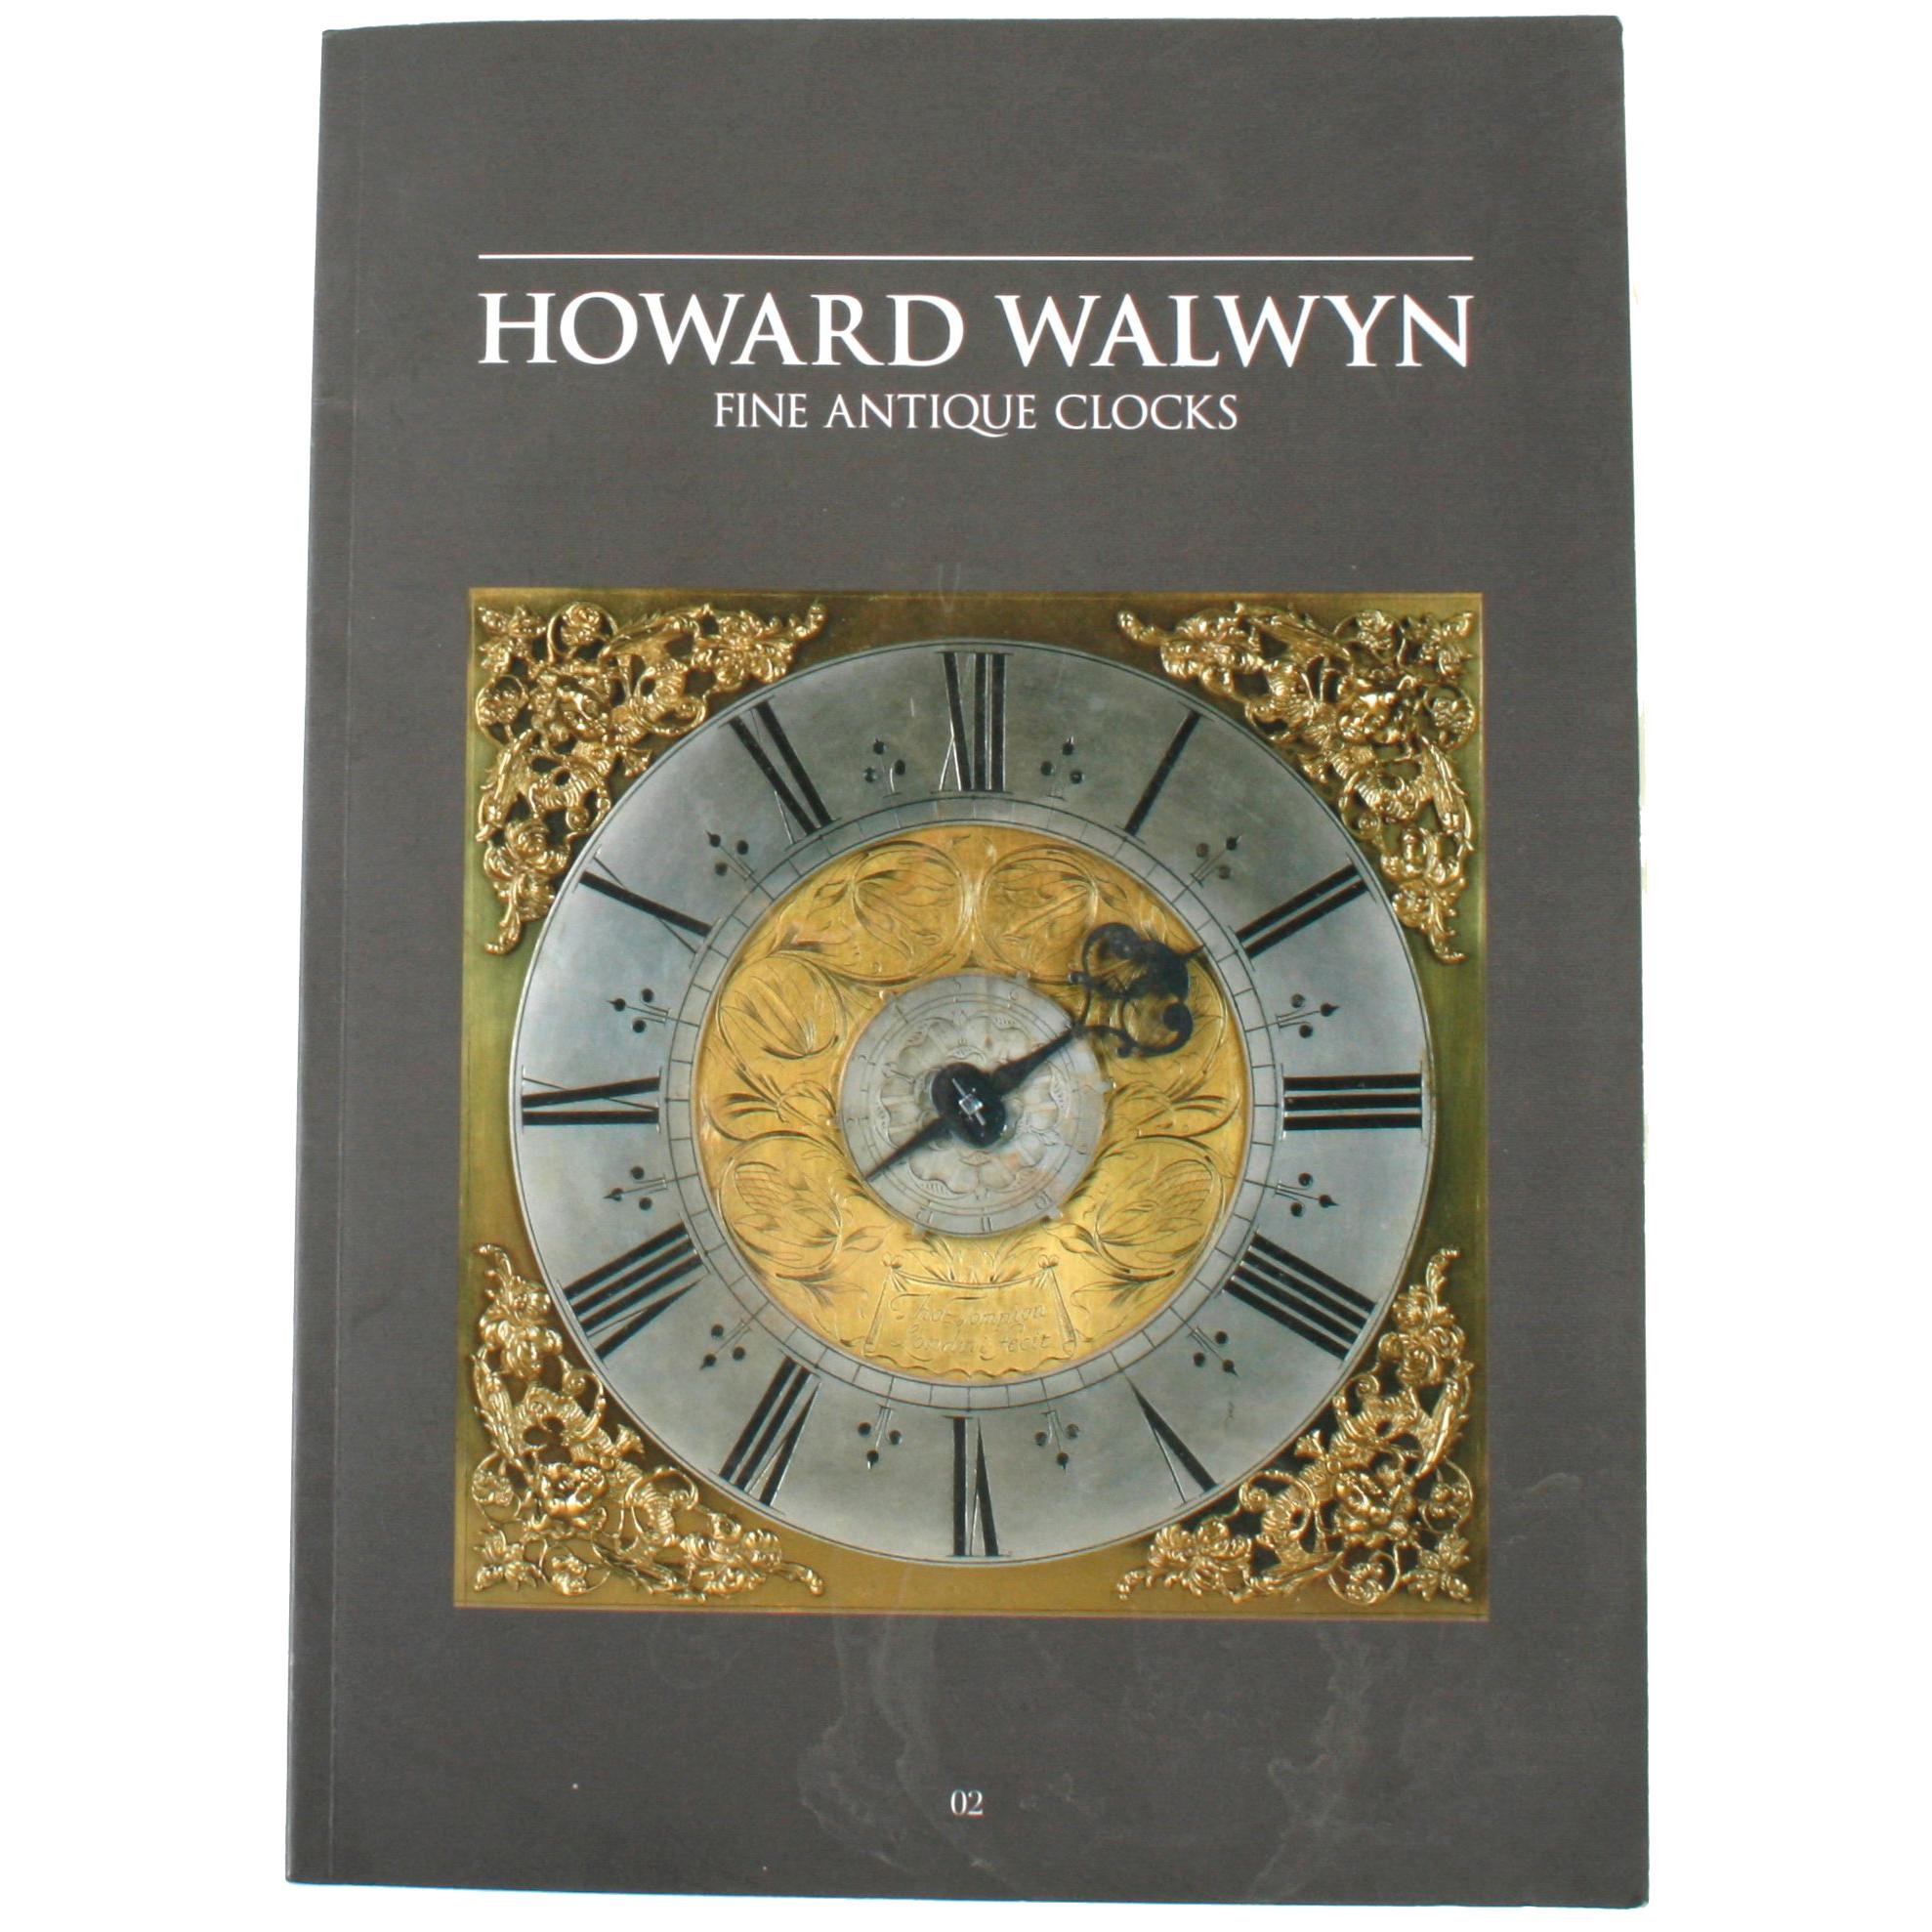 Feines antikes Uhrenkatalog von Howard Walwyn